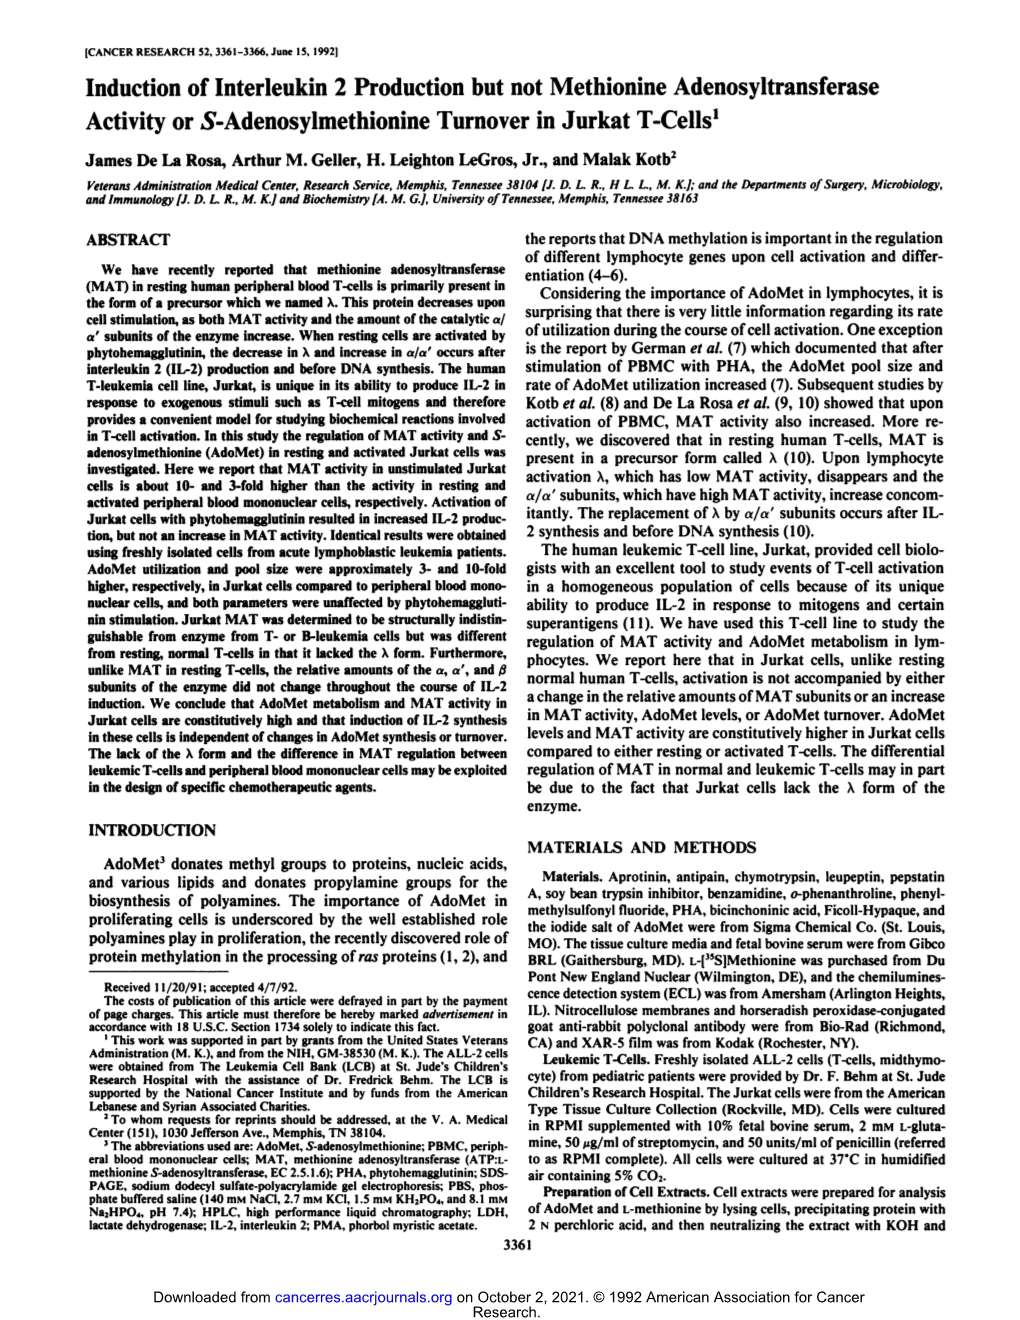 Induction of Interleukin 2 Production but Not Methionine Adenosyltransferase Activity Or S-Adenosylmethionine Turnover in Jurkat T-Cells1